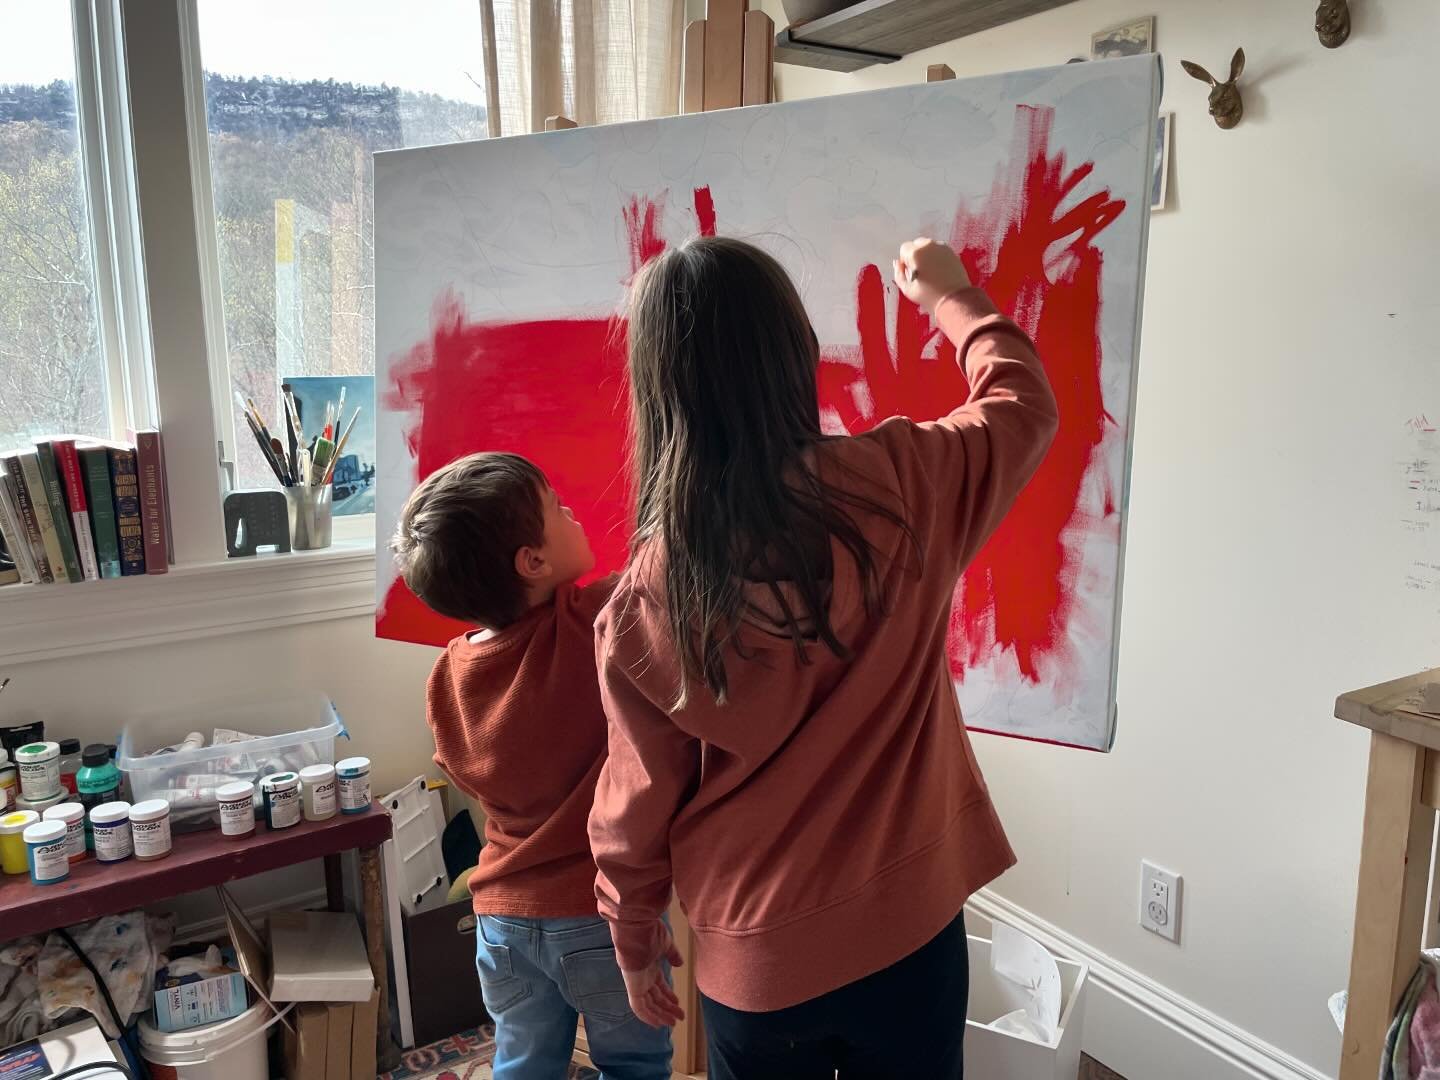 My littles helping me start the next painting. ❤️
.
.
.
#hudsonvalleyartist #hudsonvalleyart #artistmom #momartist #womanartist #artstudio